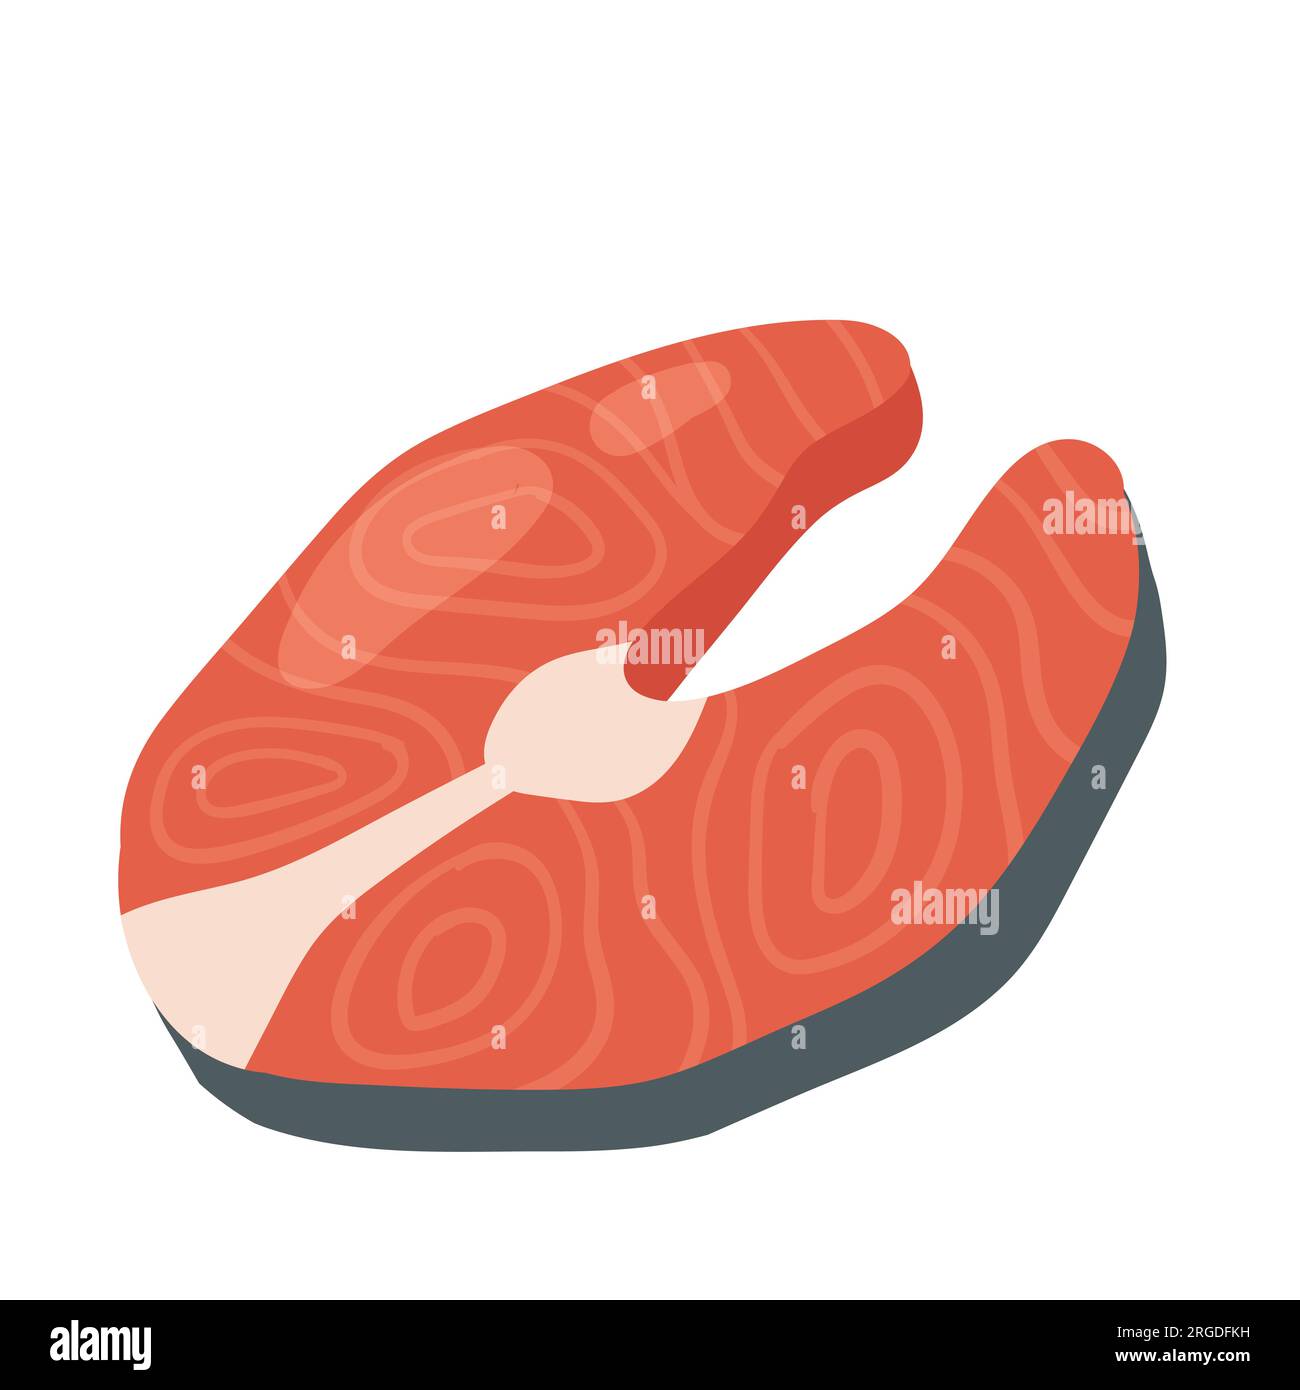 https://c8.alamy.com/comp/2RGDFKH/raw-salmon-steak-fish-filet-seafood-menu-healthy-protein-food-vector-illustration-2RGDFKH.jpg